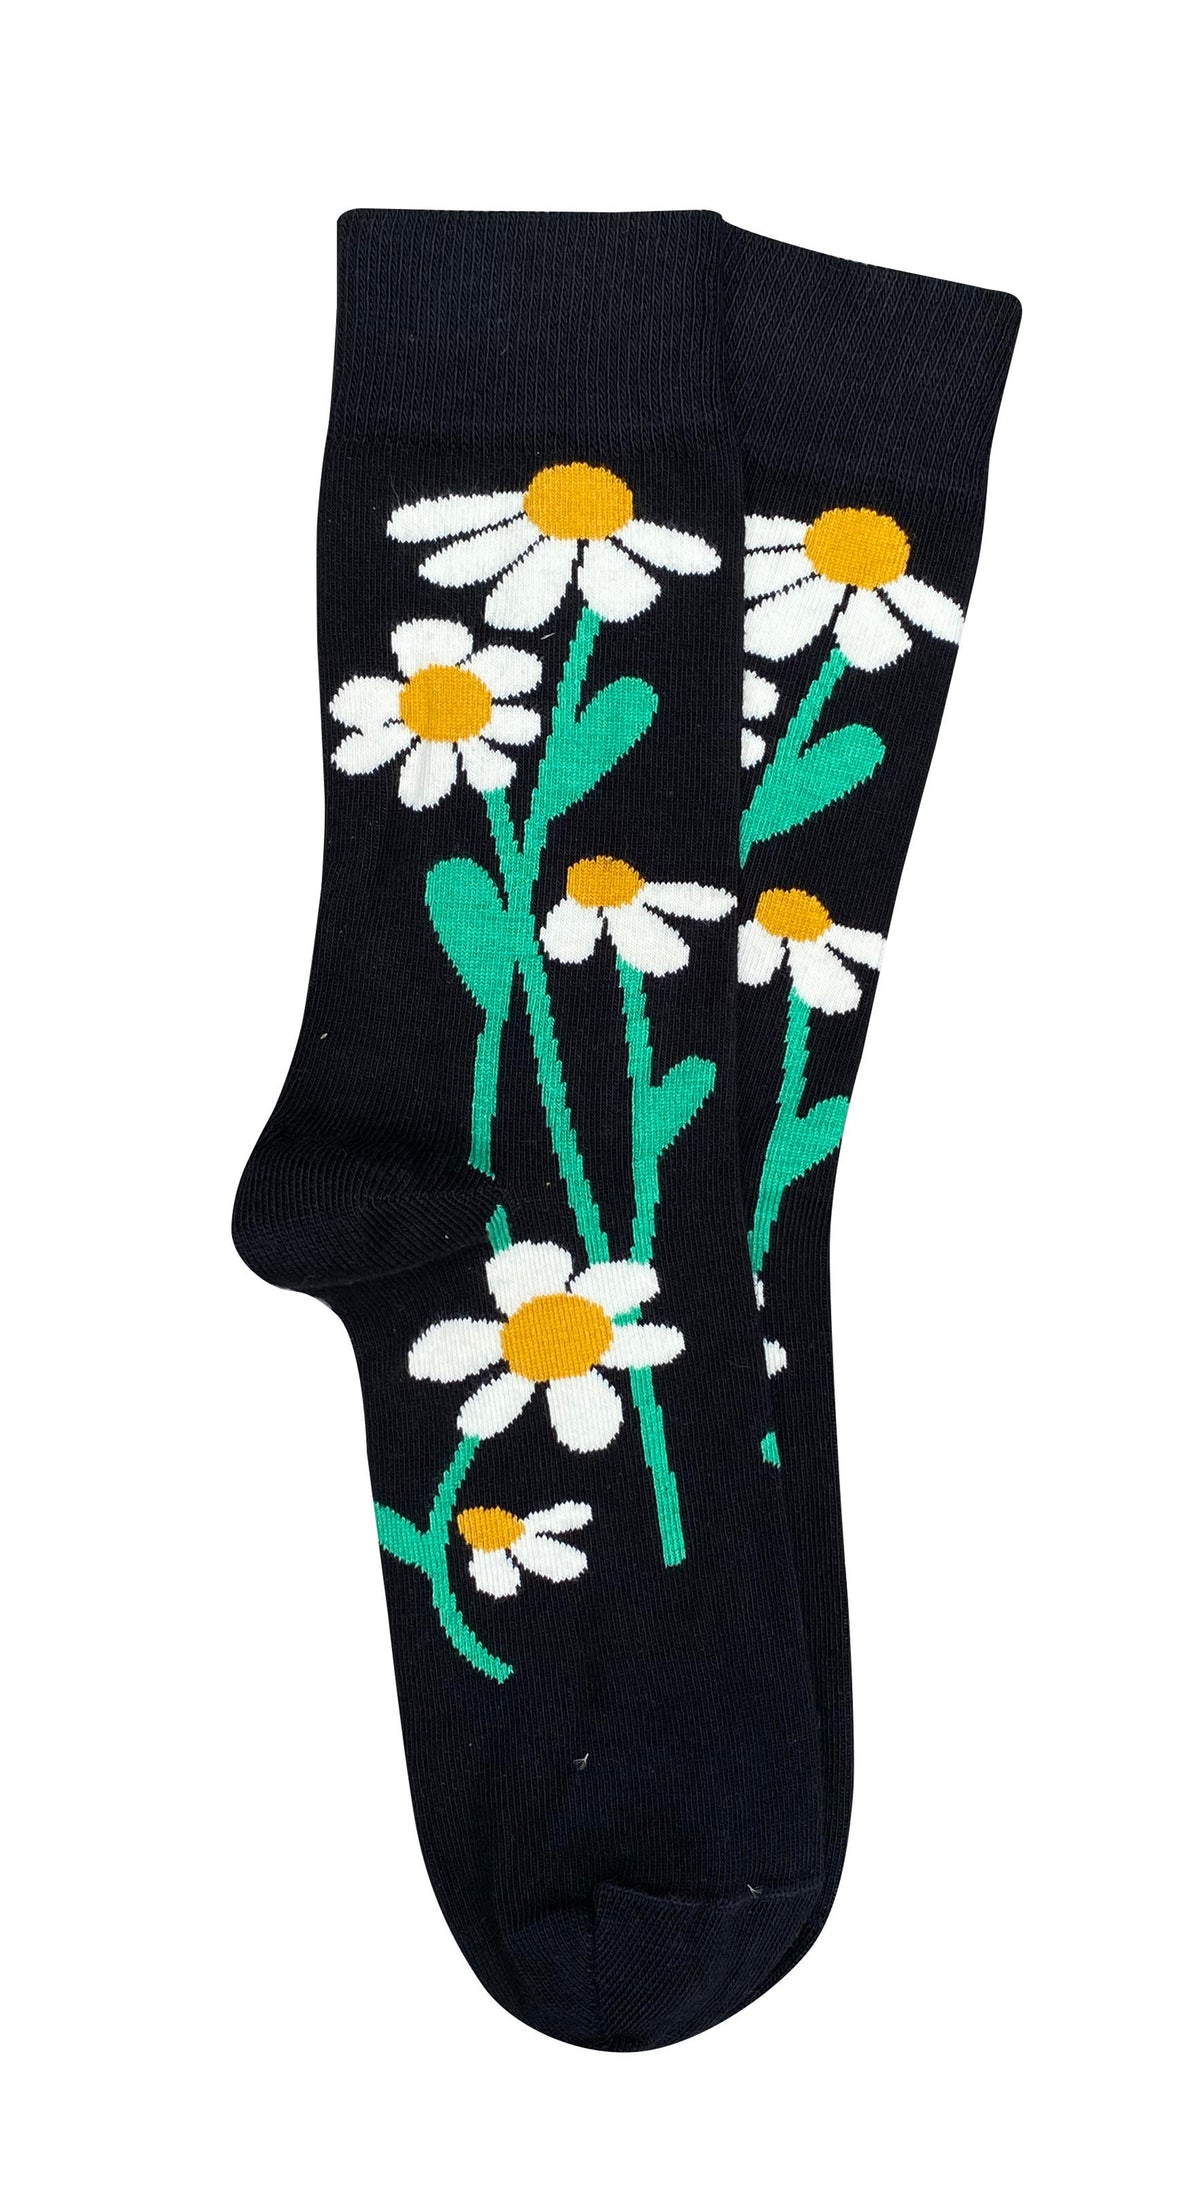 Tightology – Daisy Cotton Socks in Black